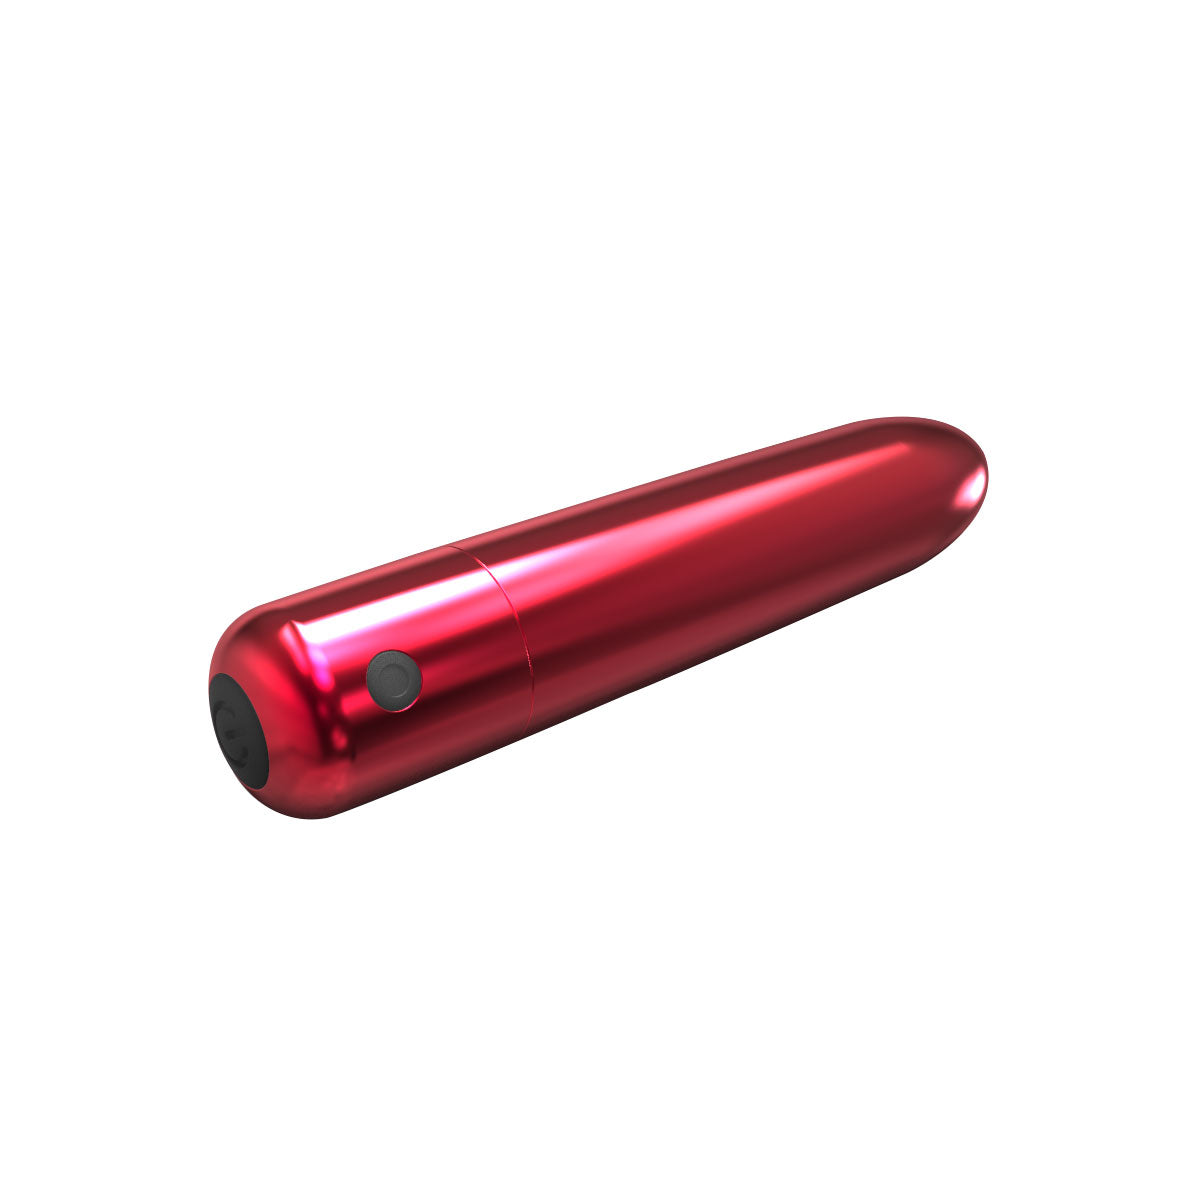 PowerBullet Bullet Point – Bullet Vibrator – USB Rechargeable – Pink